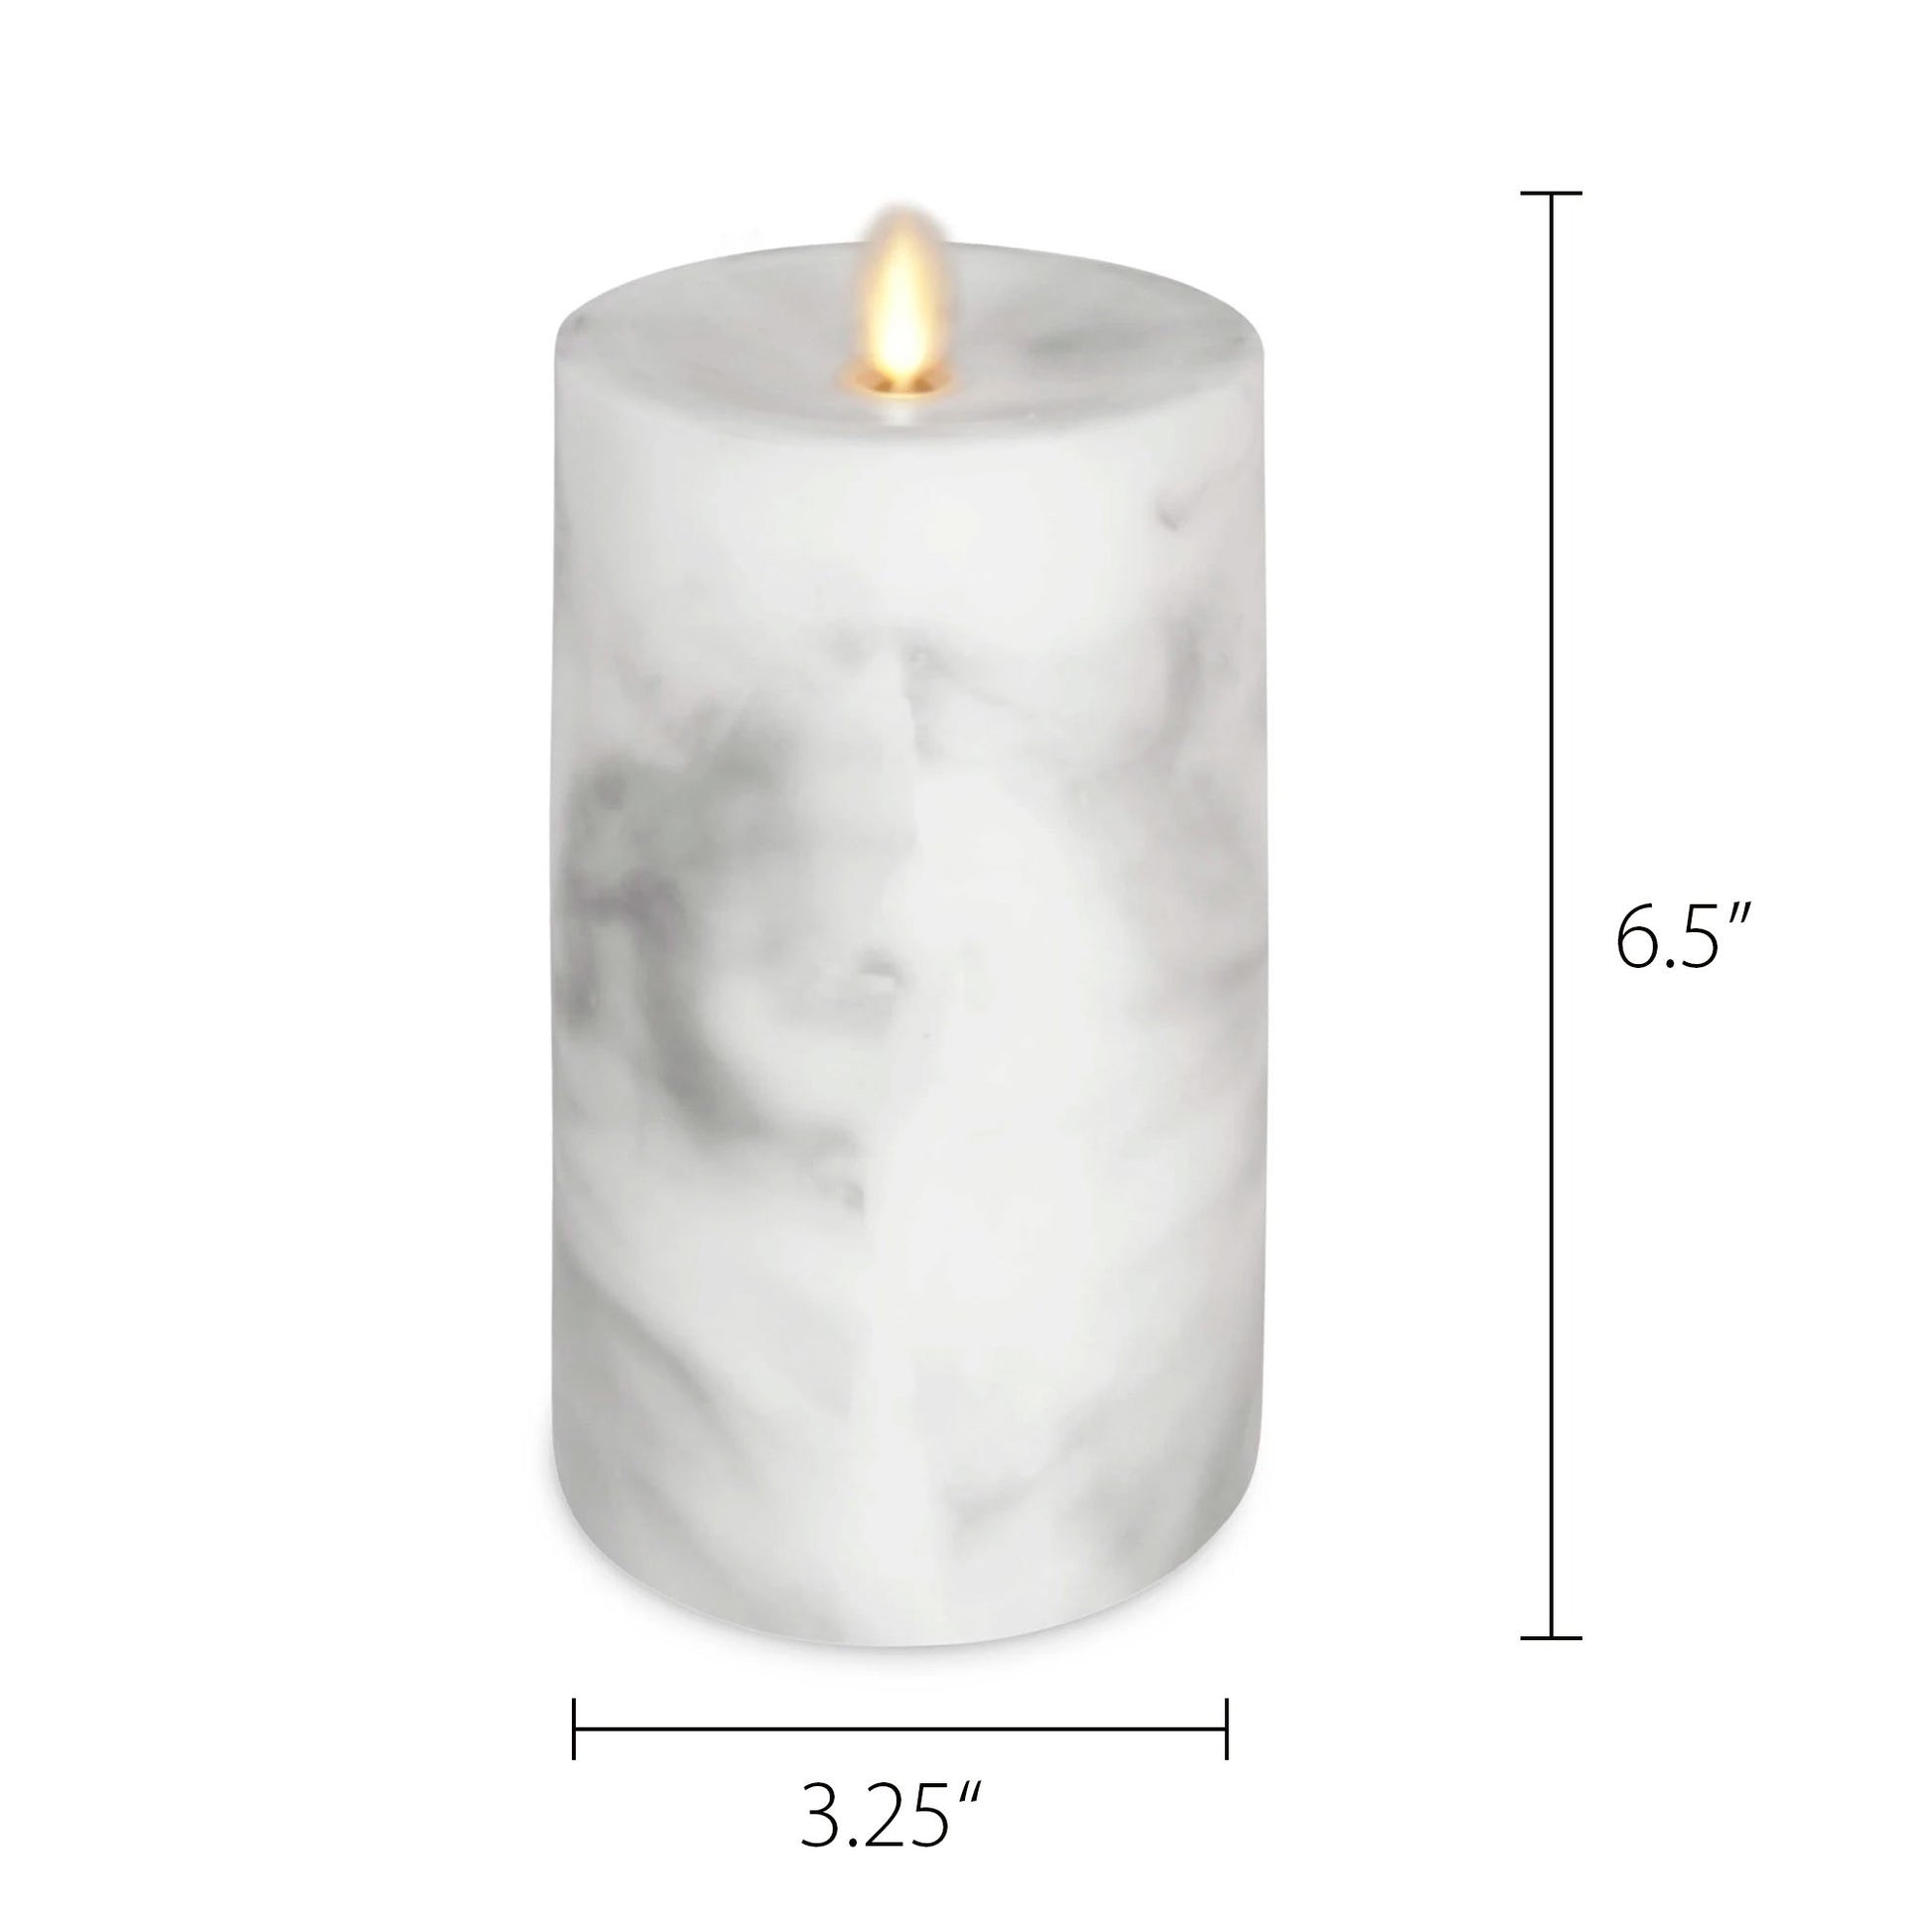 Luminara's Marble Flameless Candle